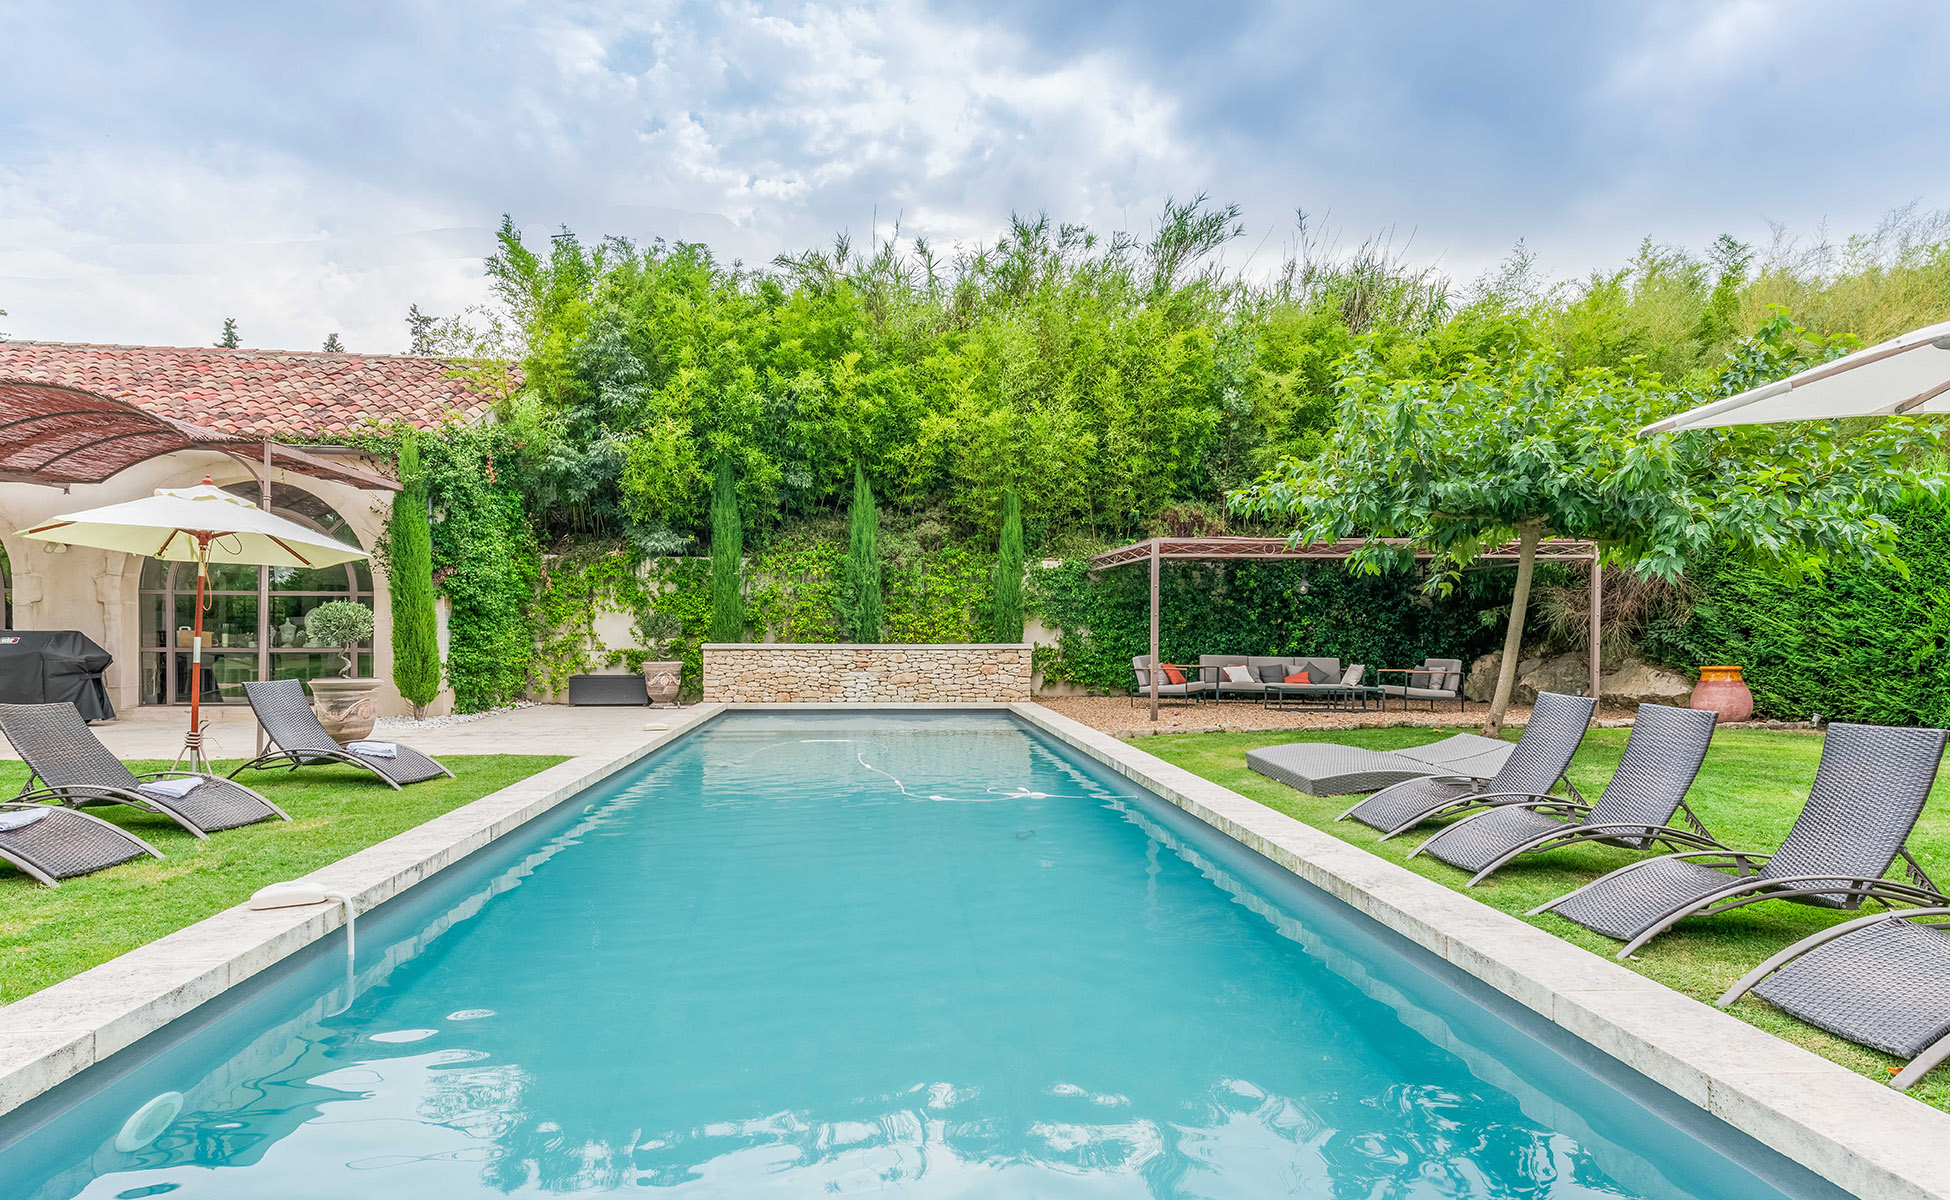 Lovelydays luxury service apartment rental - St Rémy de Provence and surroundings - Mas Ameu - Partner - 6 bedrooms - 6 bathrooms - Outside swimming pool - 89523419ecbf - Lovelydays